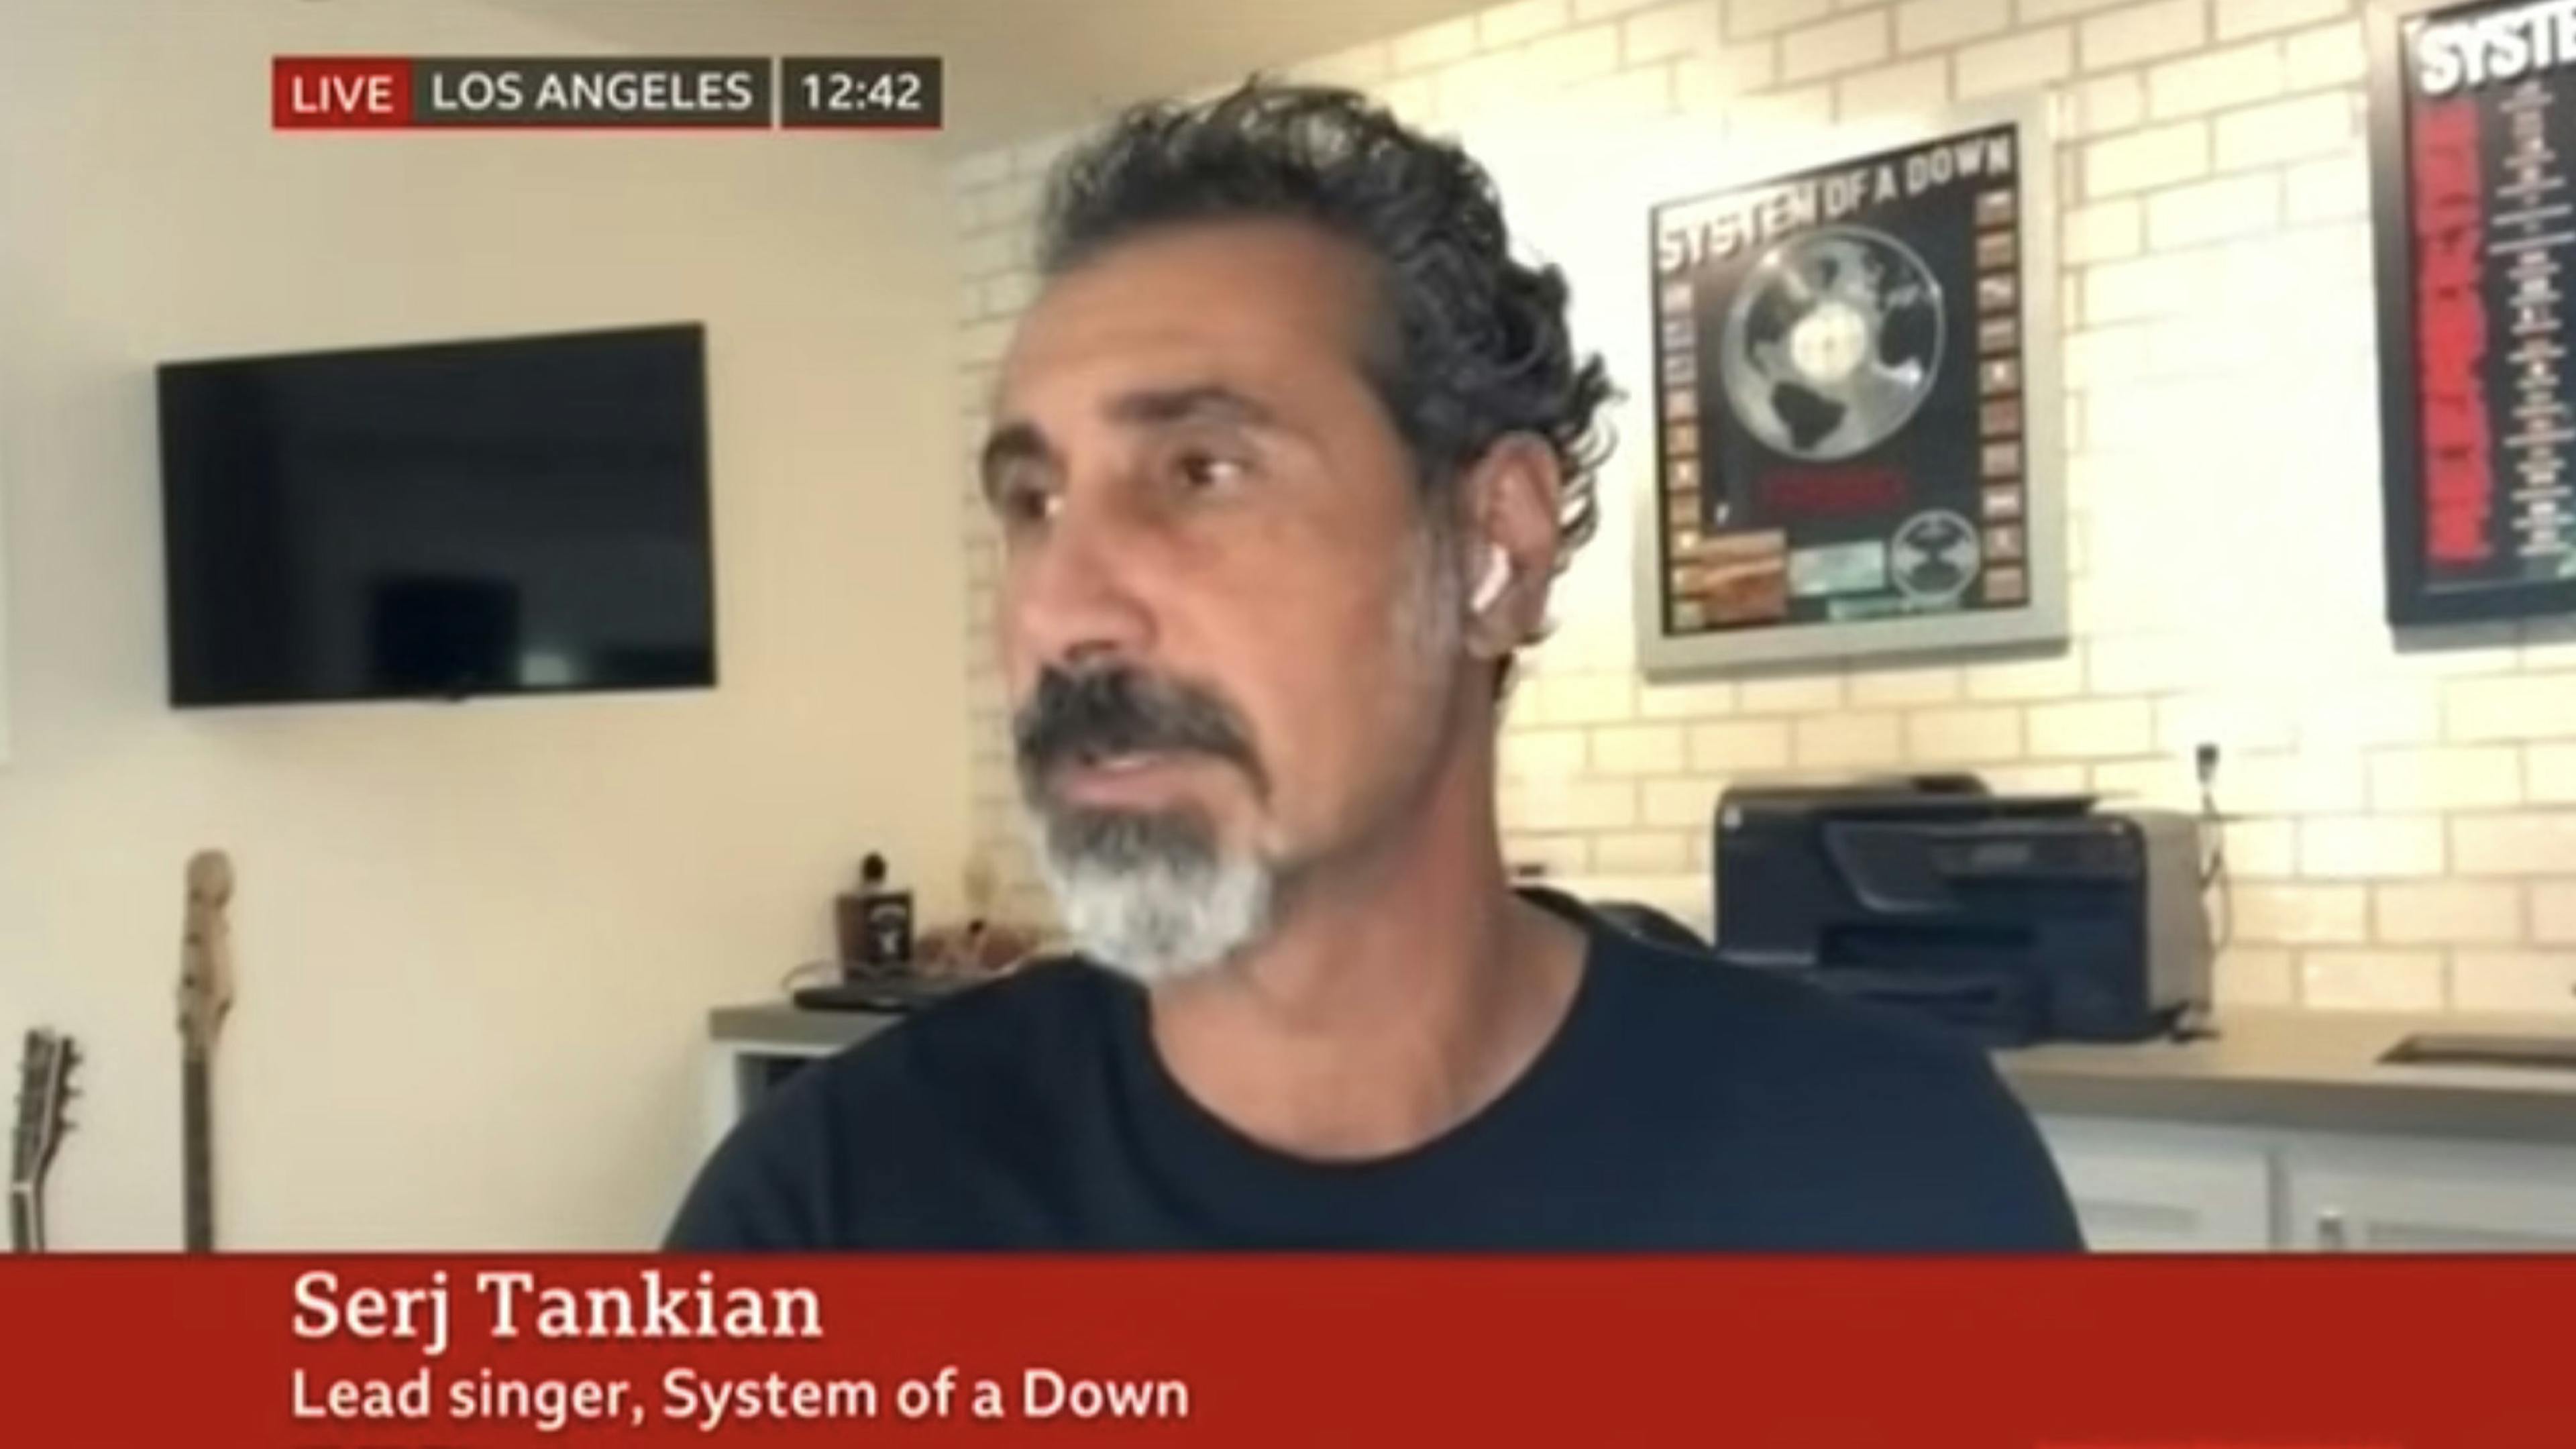 Watch: Serj Tankian appears on BBC News to discuss the humanitarian crisis in Nagorno-Karabakh